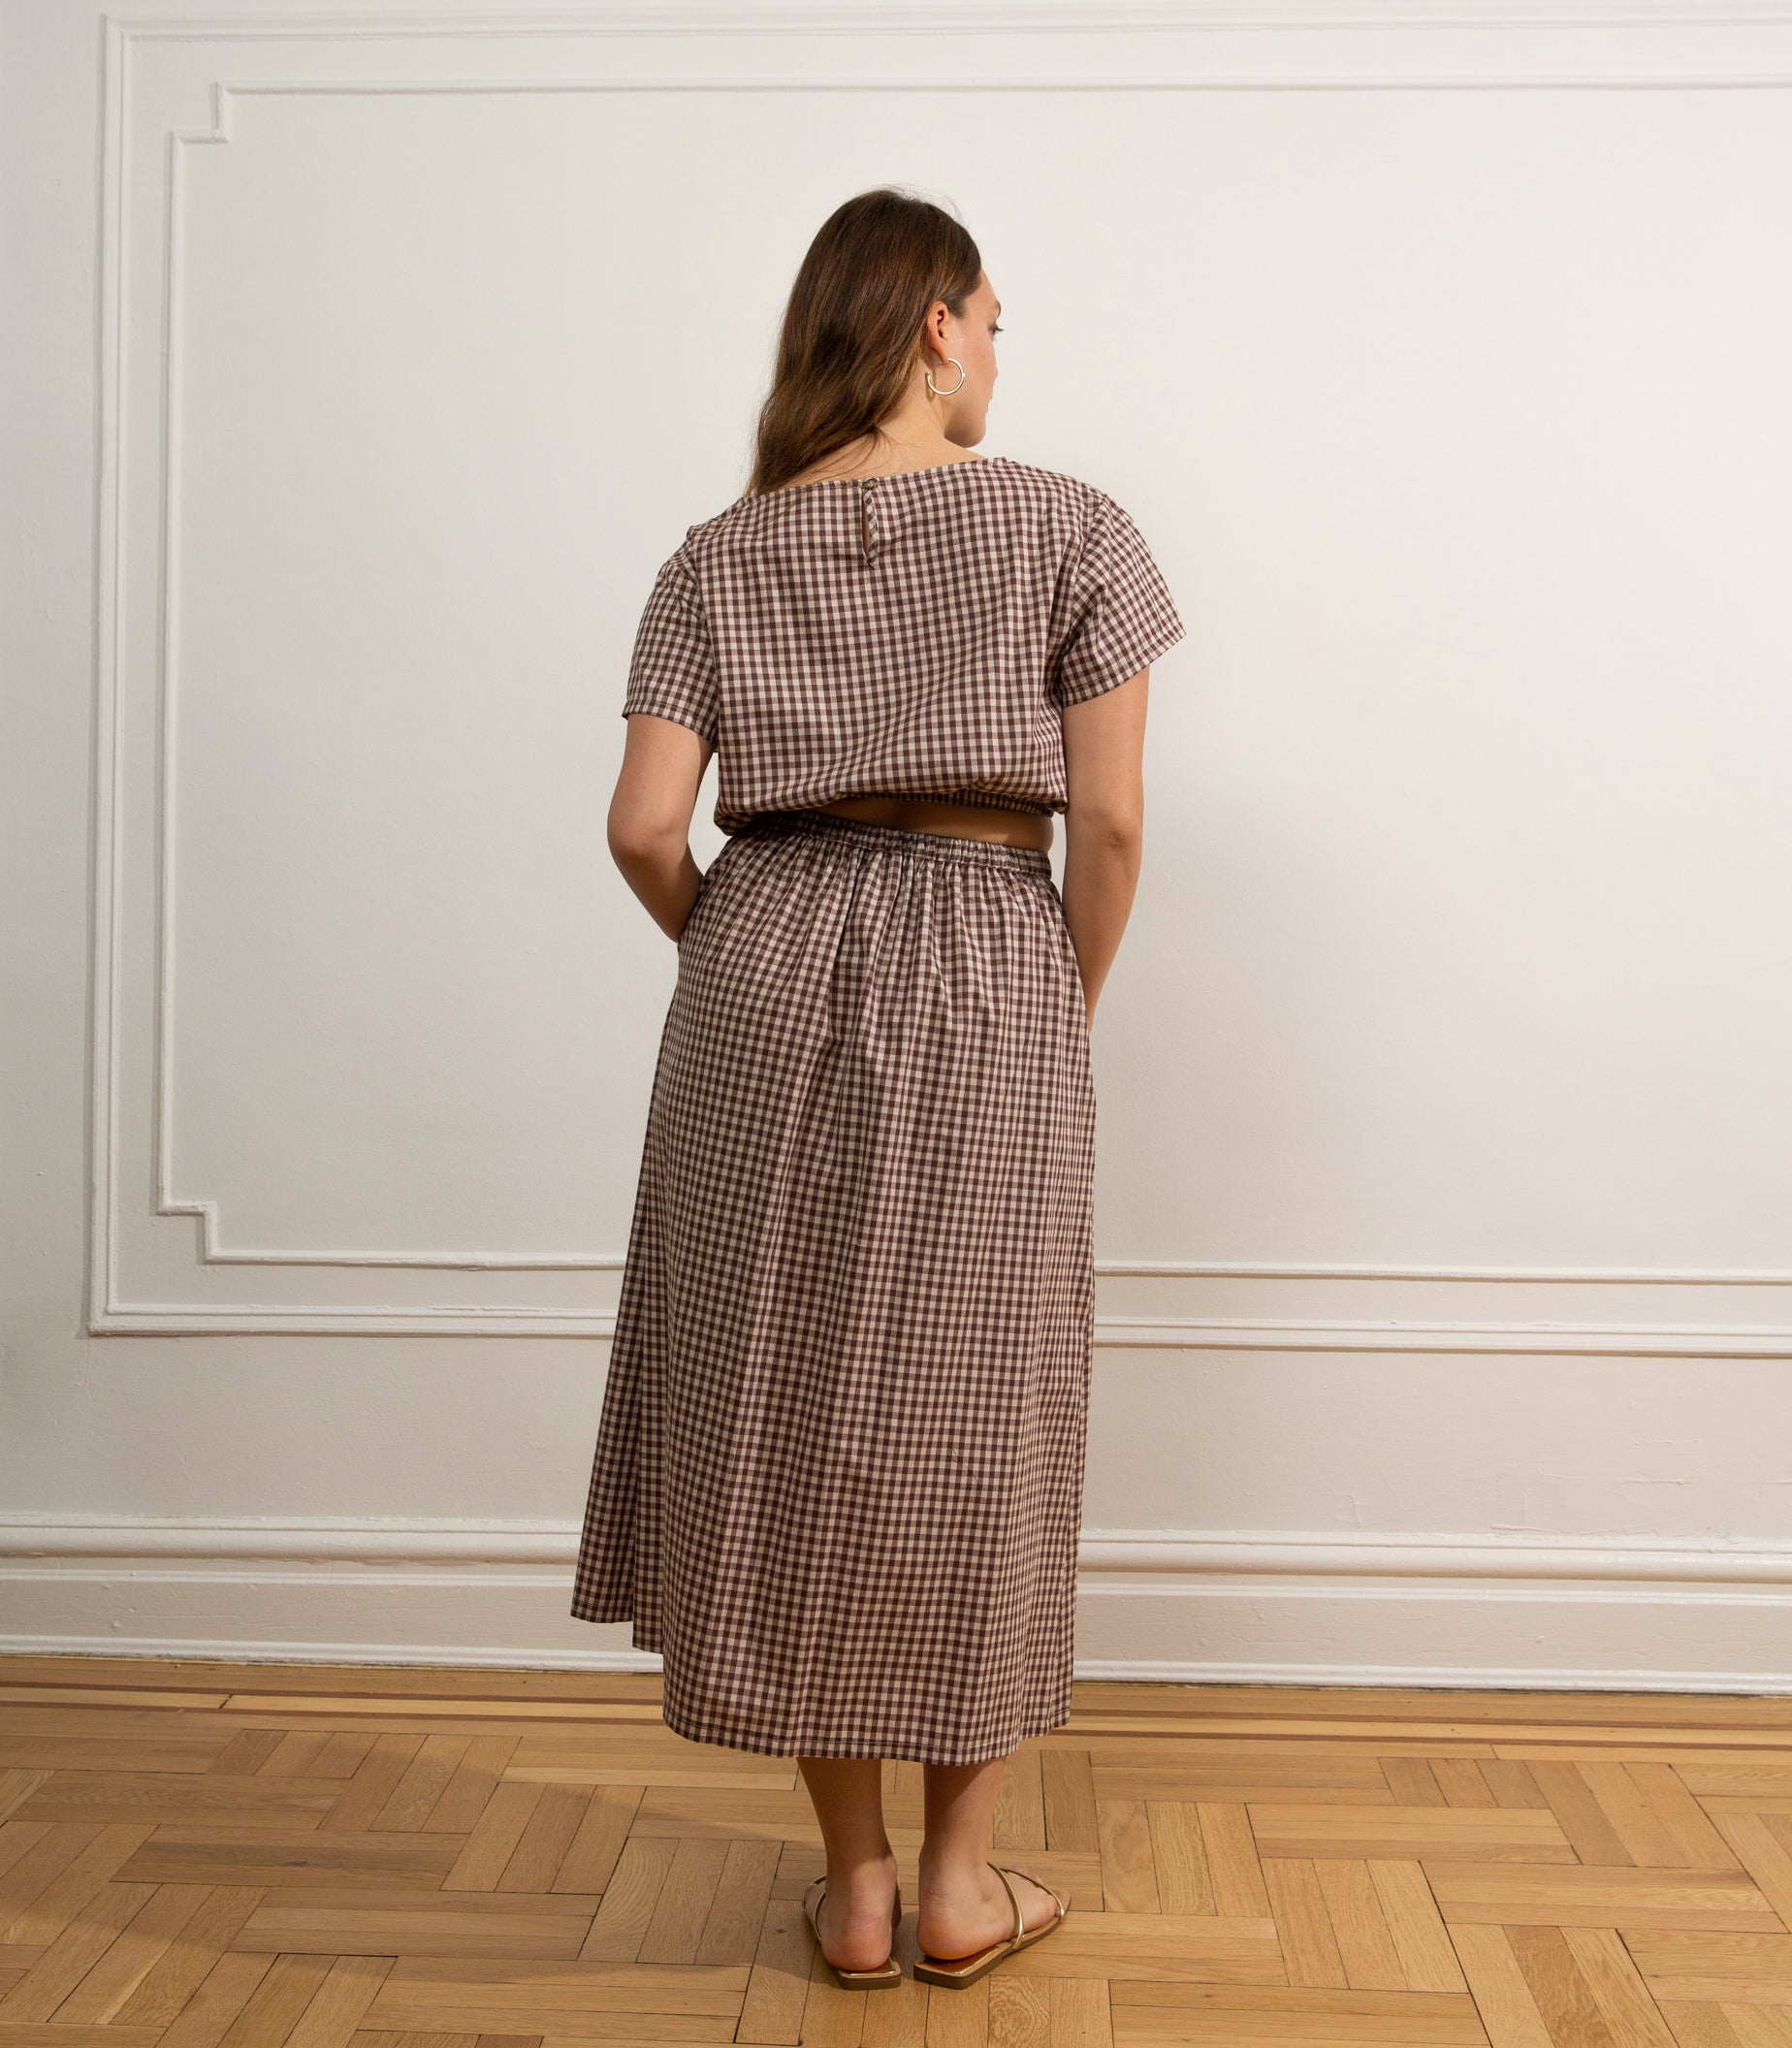 Cornielia Skirt in Brown &amp; Cream Gingham Print | Loup